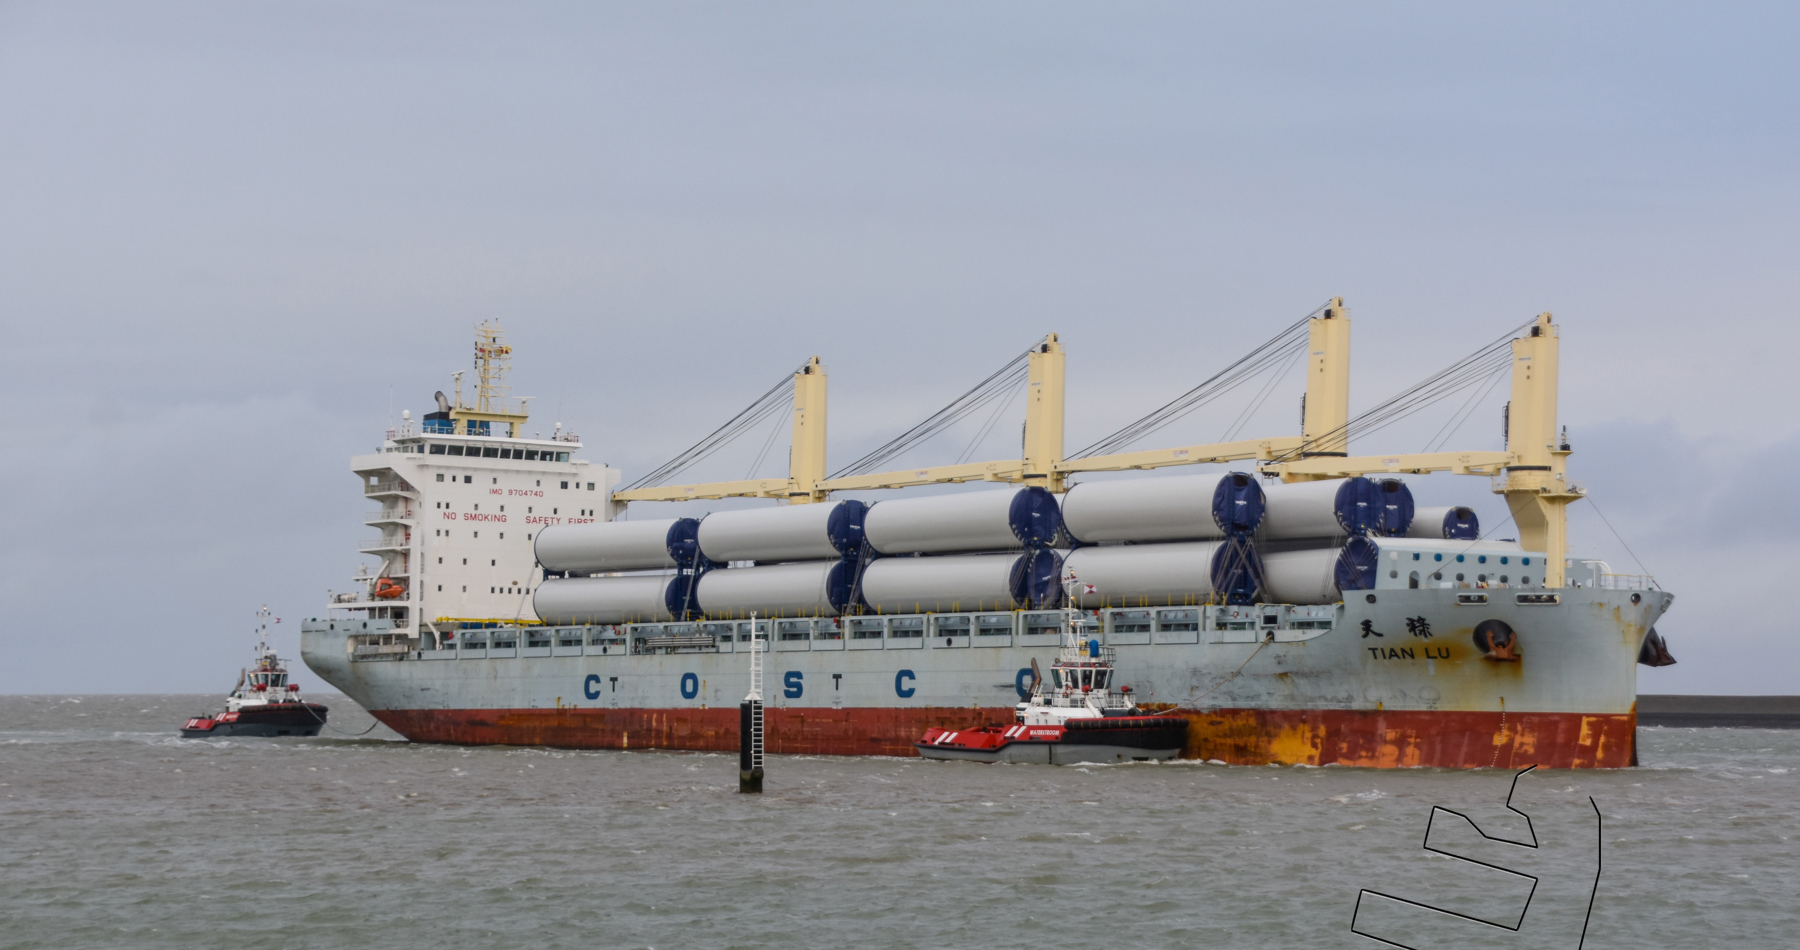 Wagenborg serves the bulk vessel Tian Lu in Eemshaven